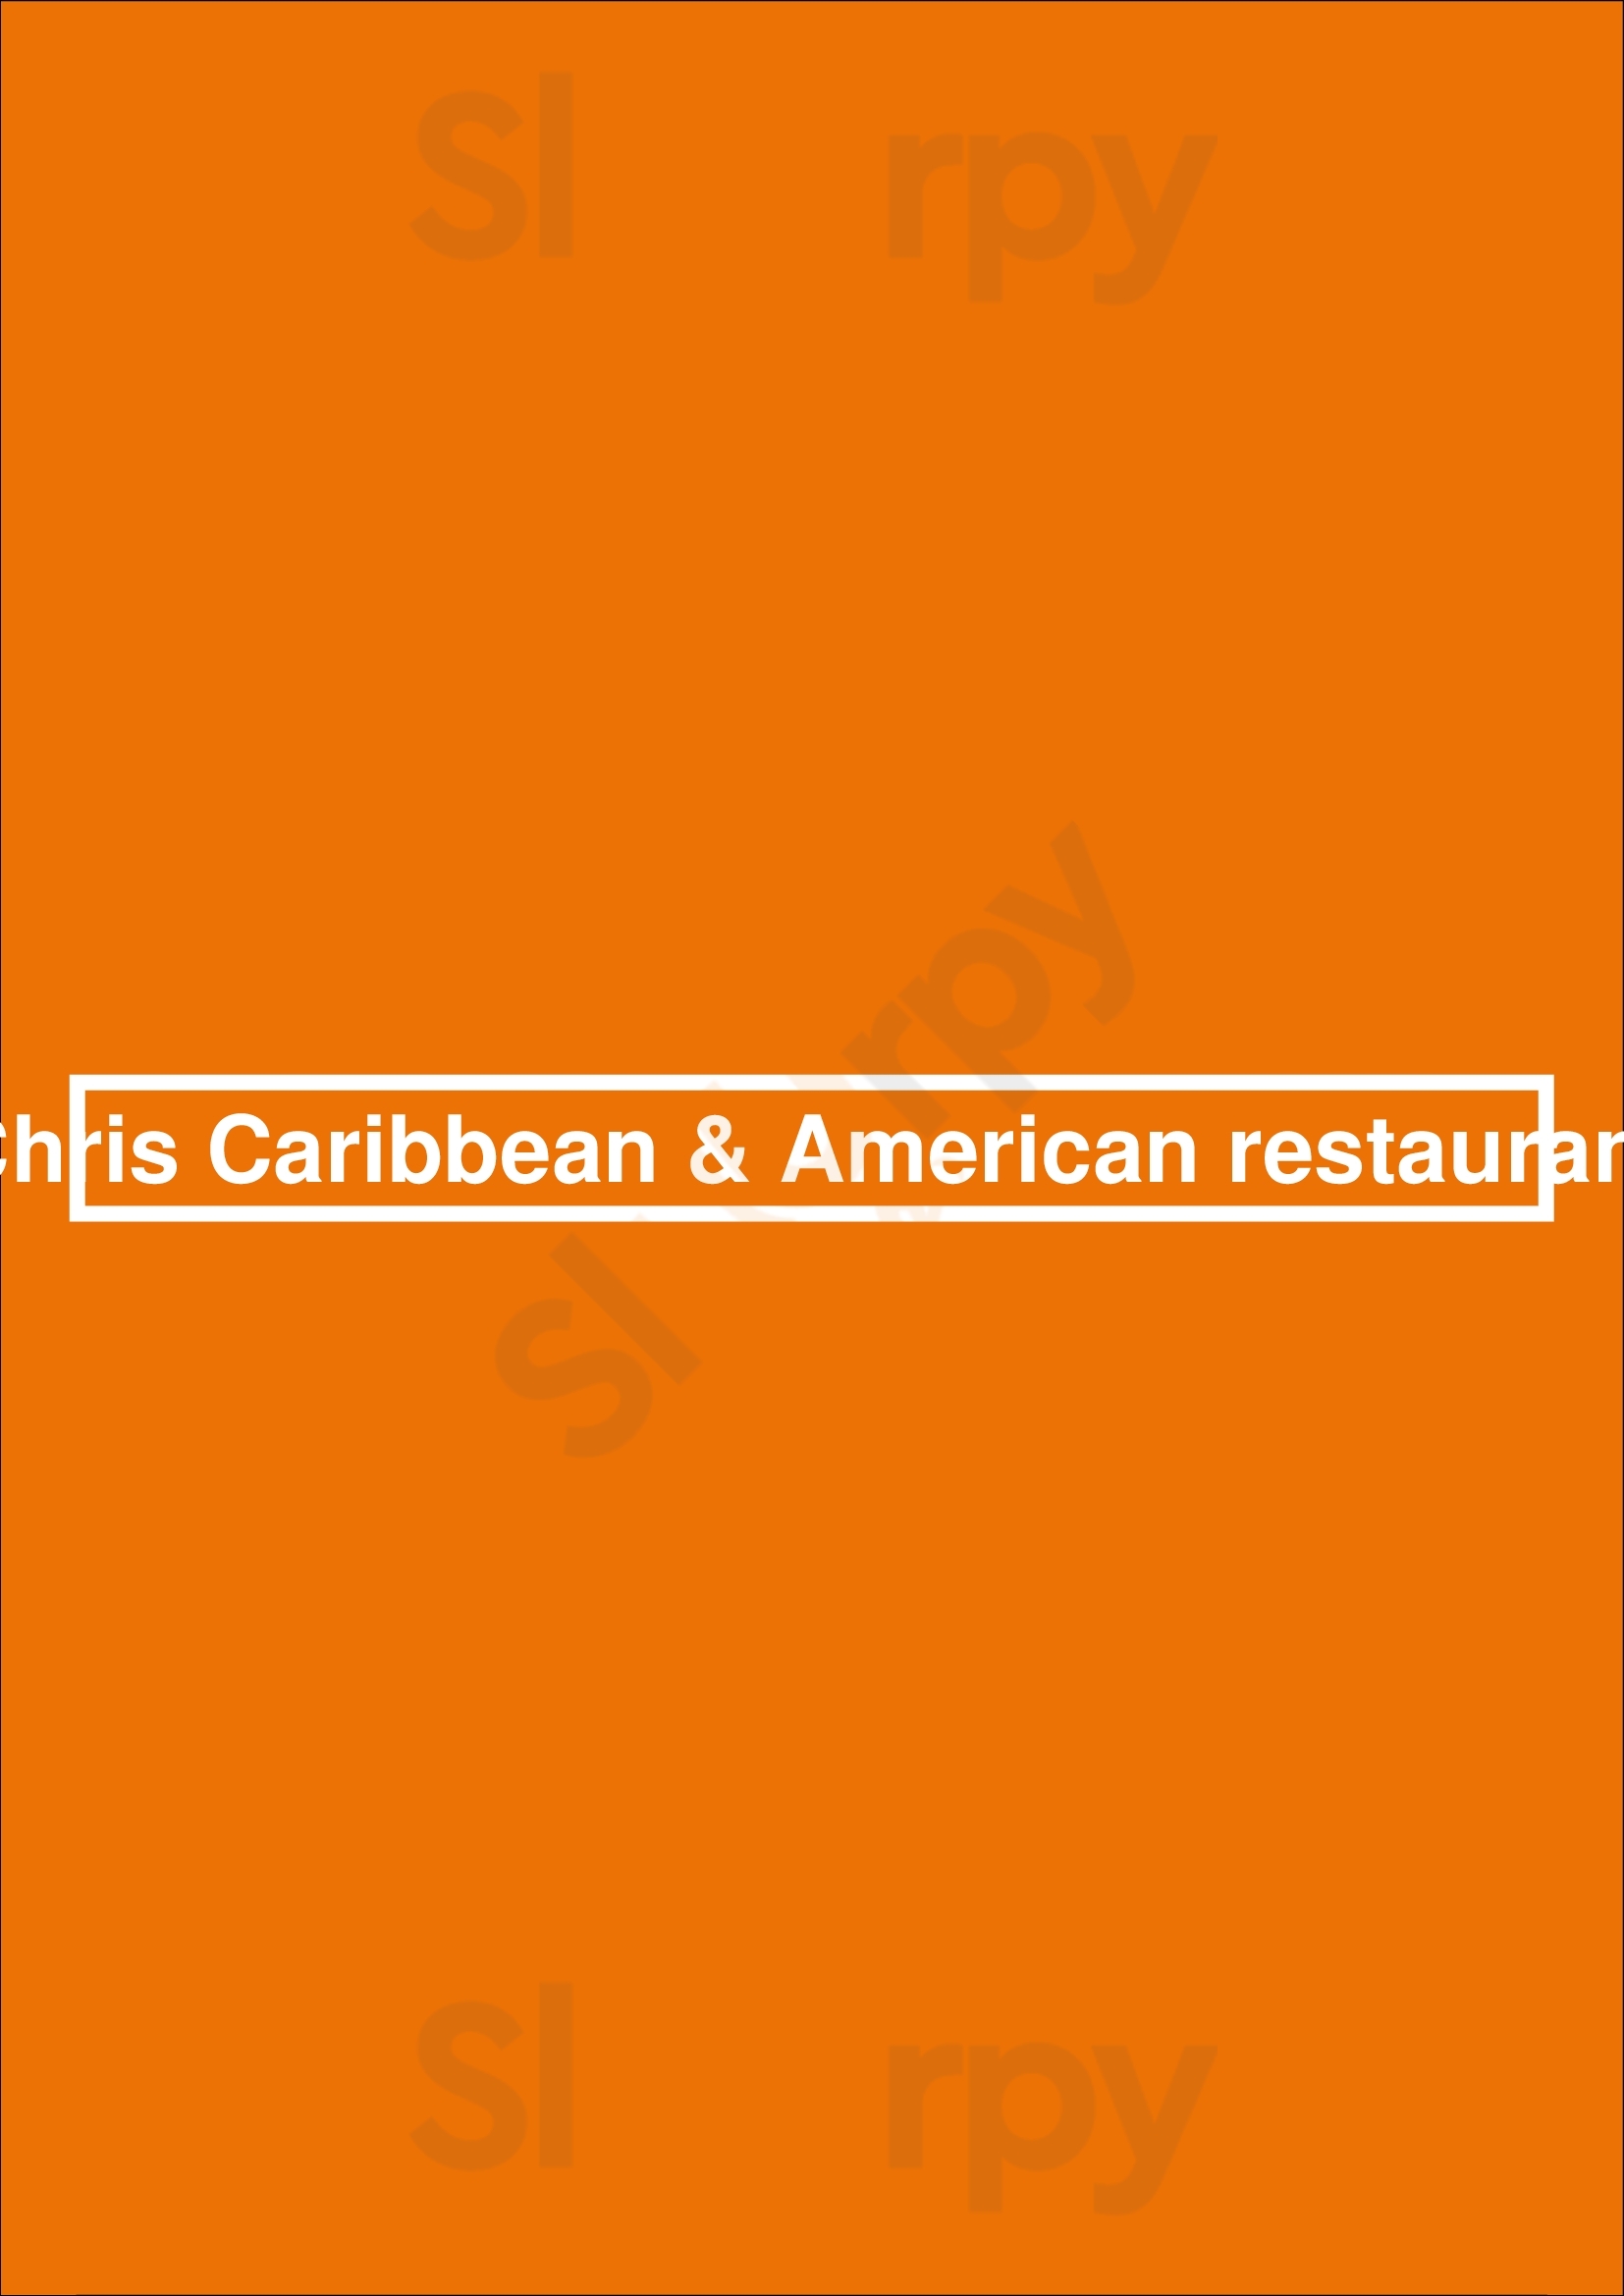 Chris Caribbean & American Restaurant Brooklyn Menu - 1